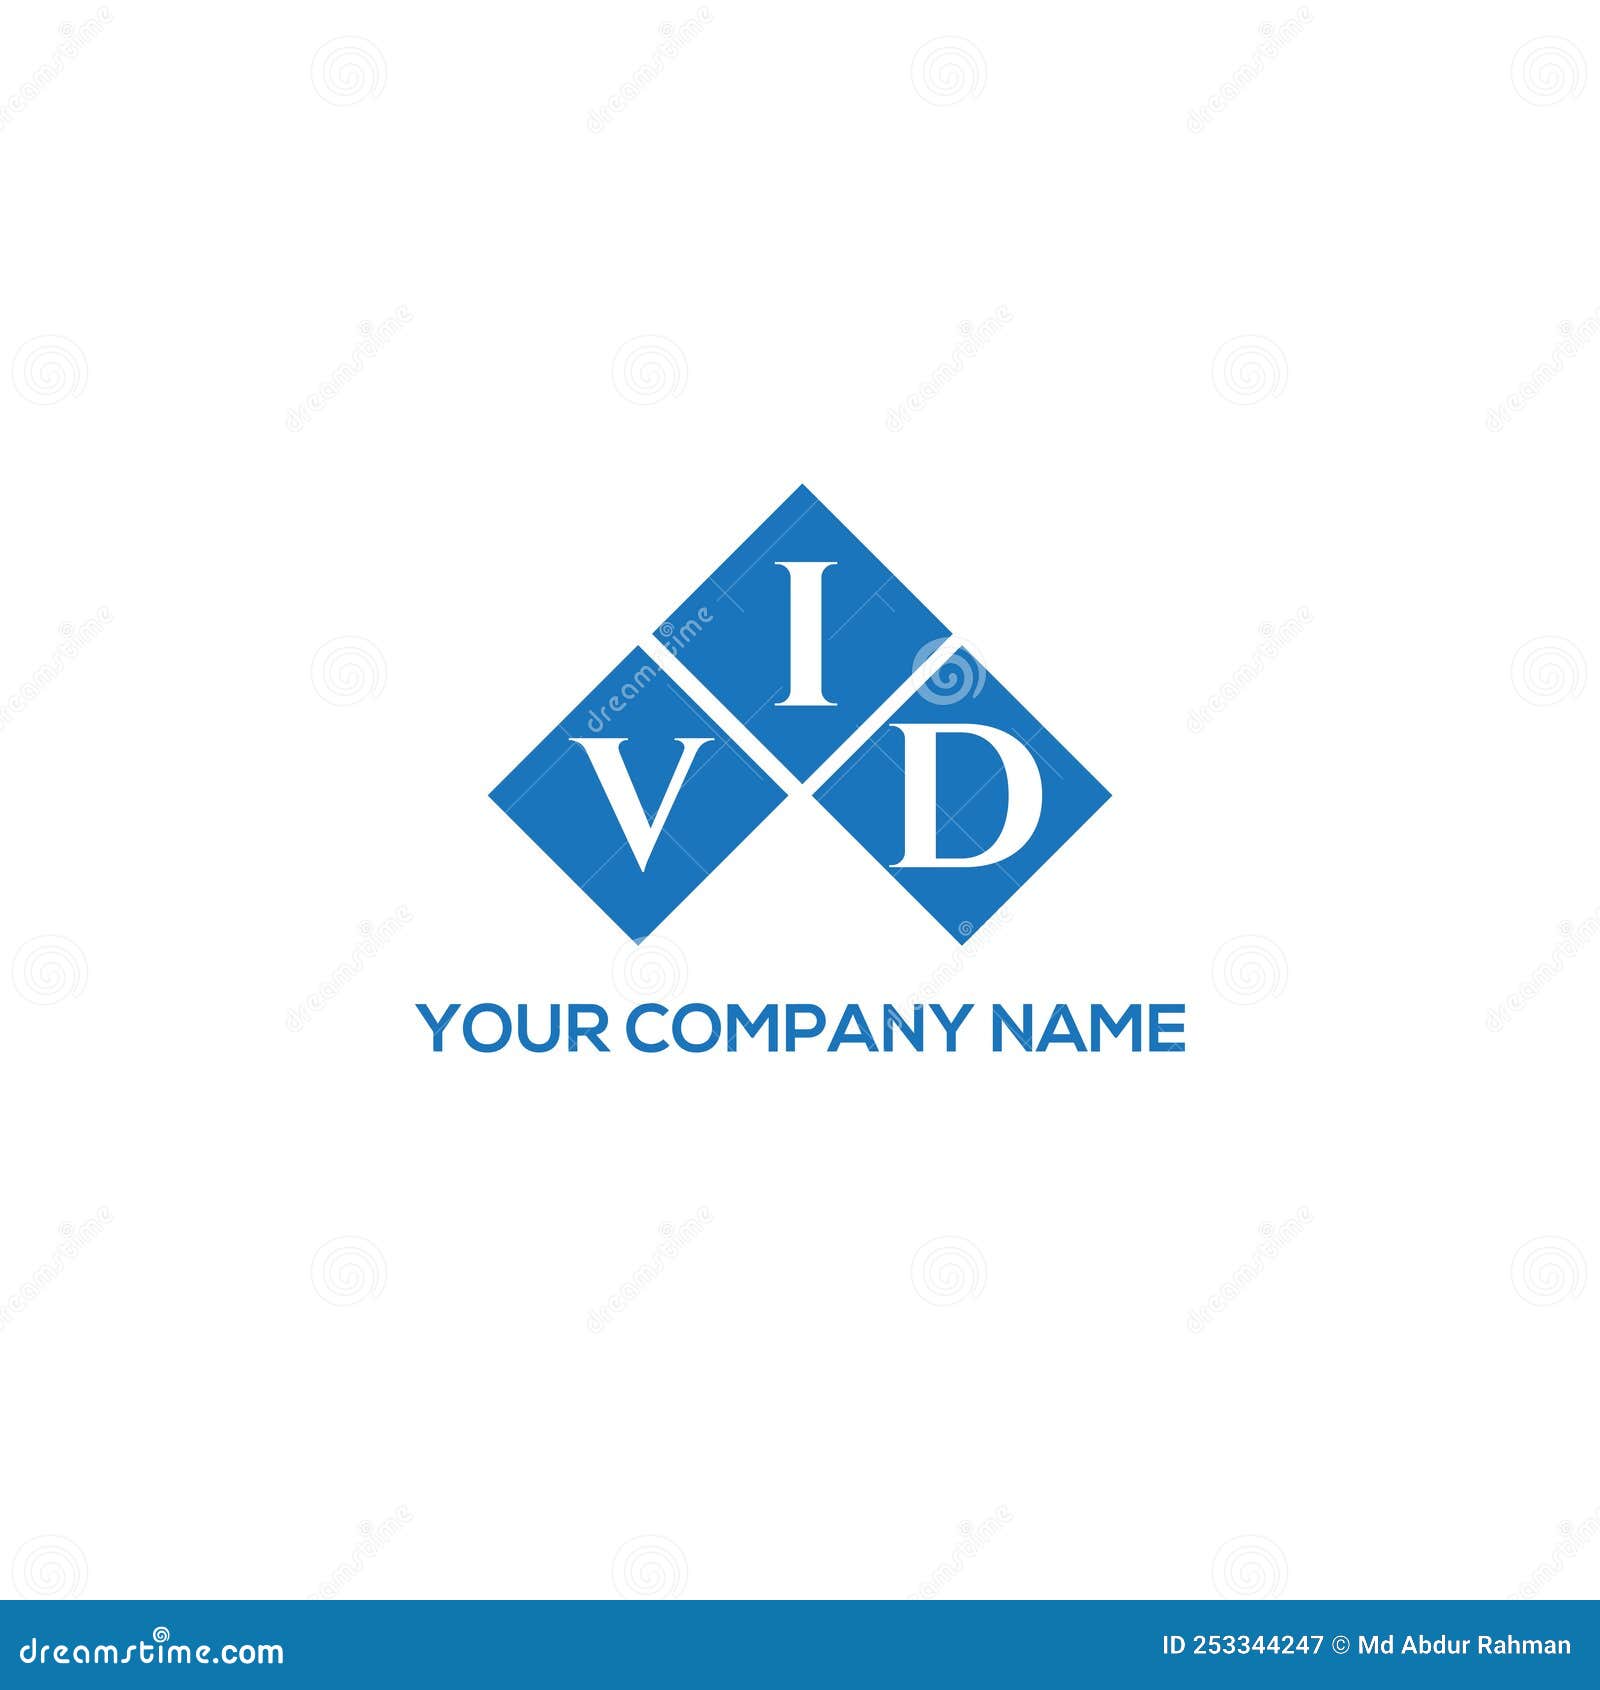 vid letter logo  on white background. vid creative initials letter logo